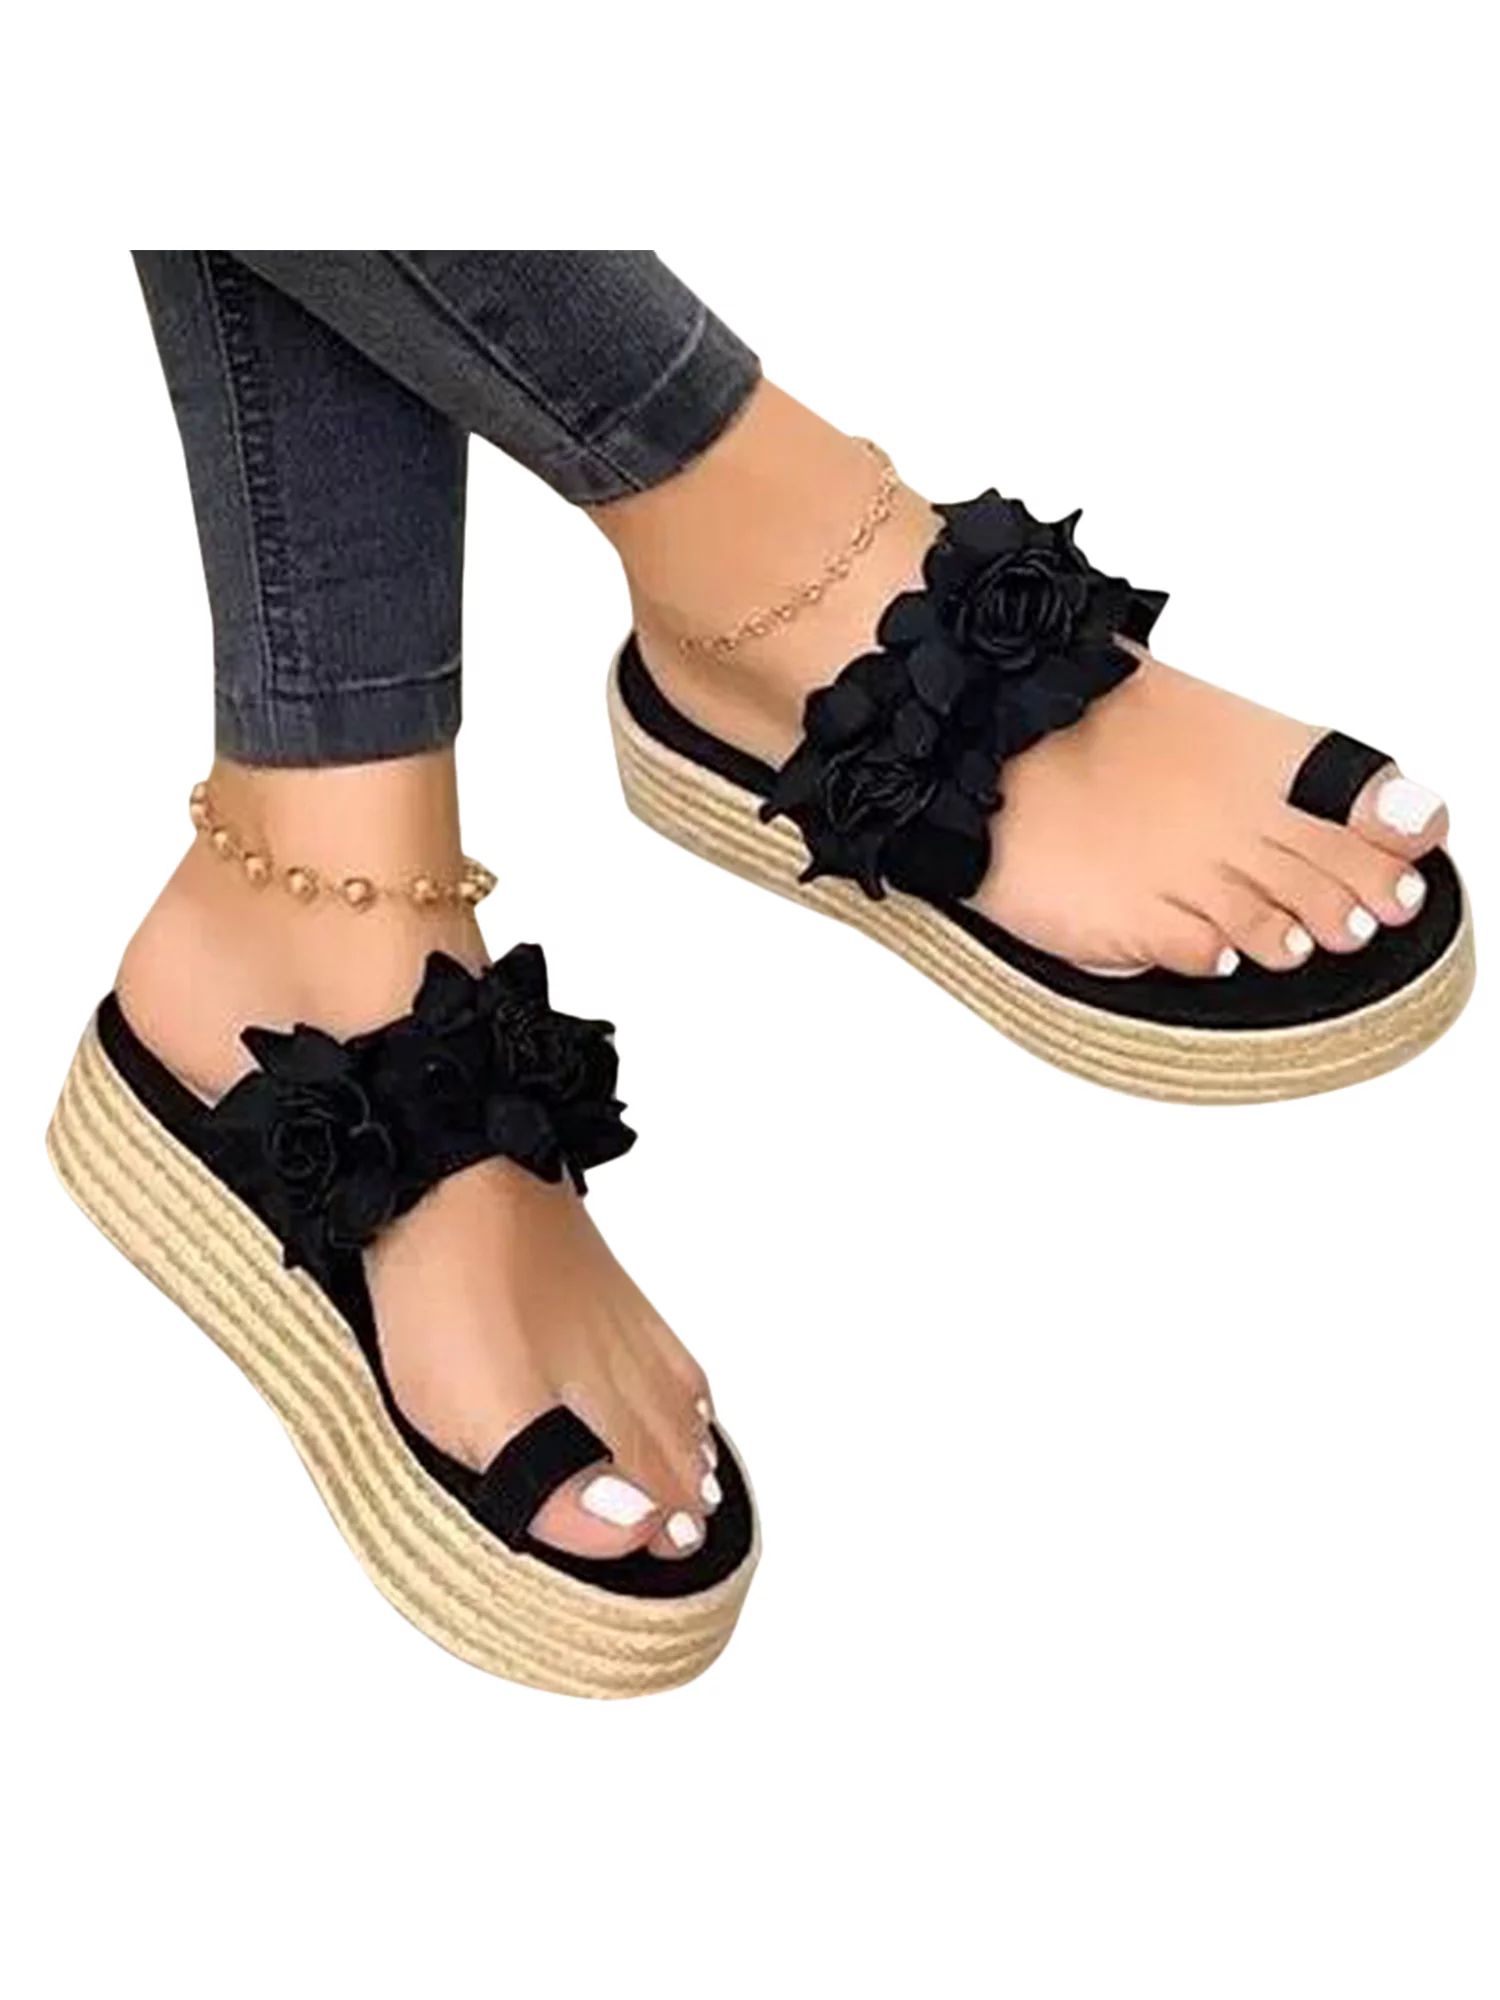 Women's Wedge Platform Sandals Espadrille Toe Ring Summer Slip On Beach Shoes | Walmart (US)